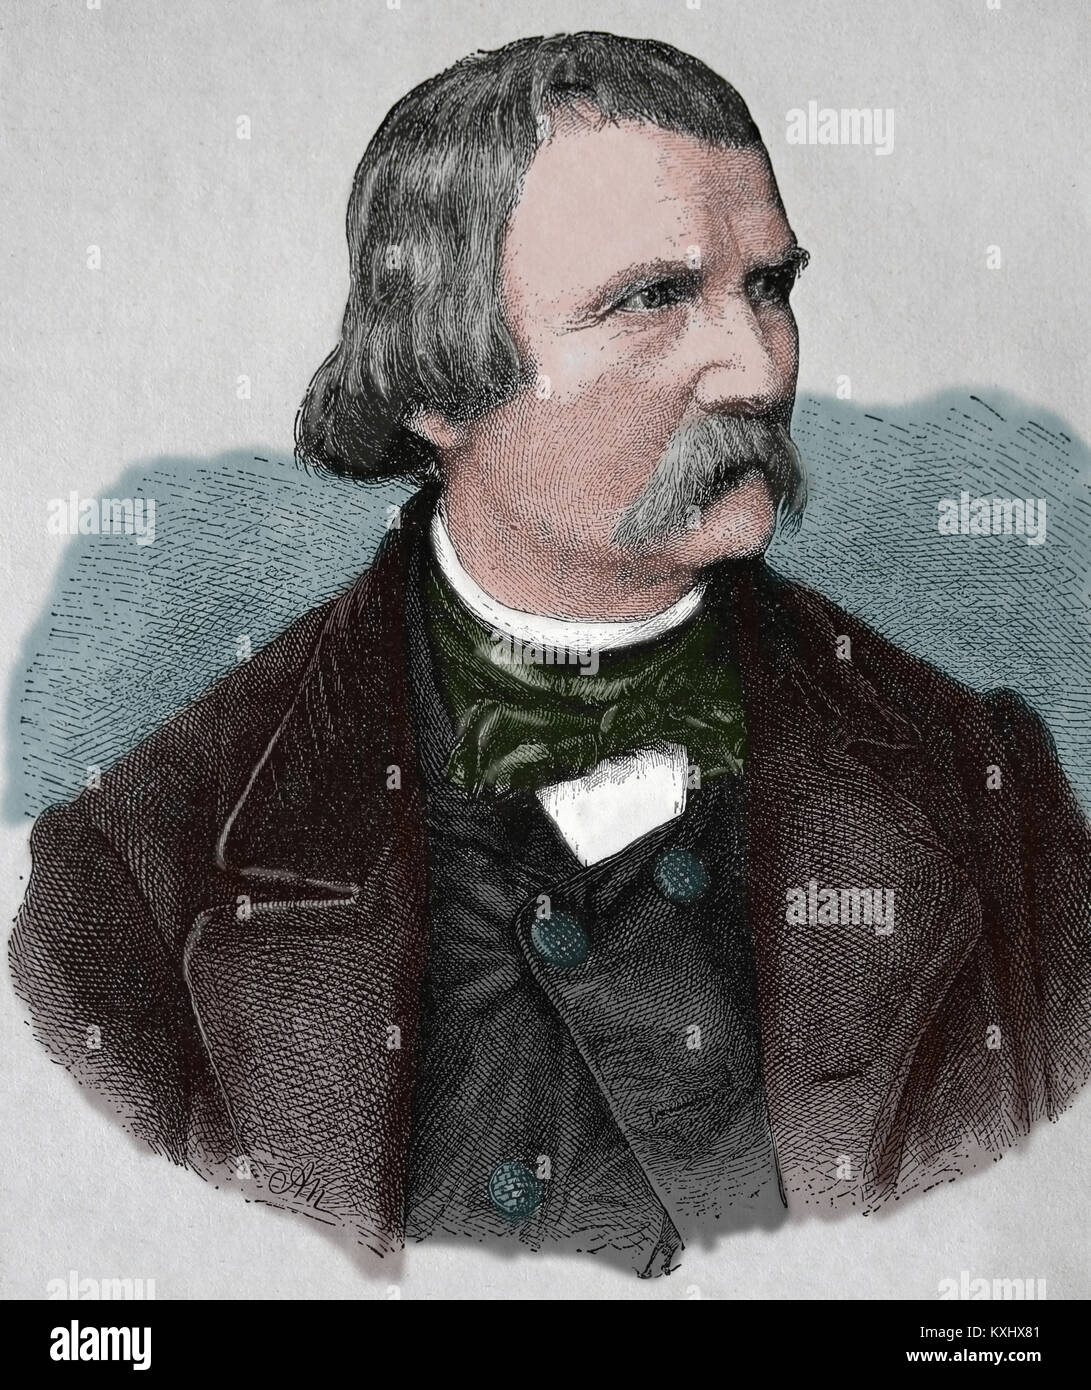 Wilhelm von Kaulbach (1805-1874). German painter. Engraving, 1883. Stock Photo